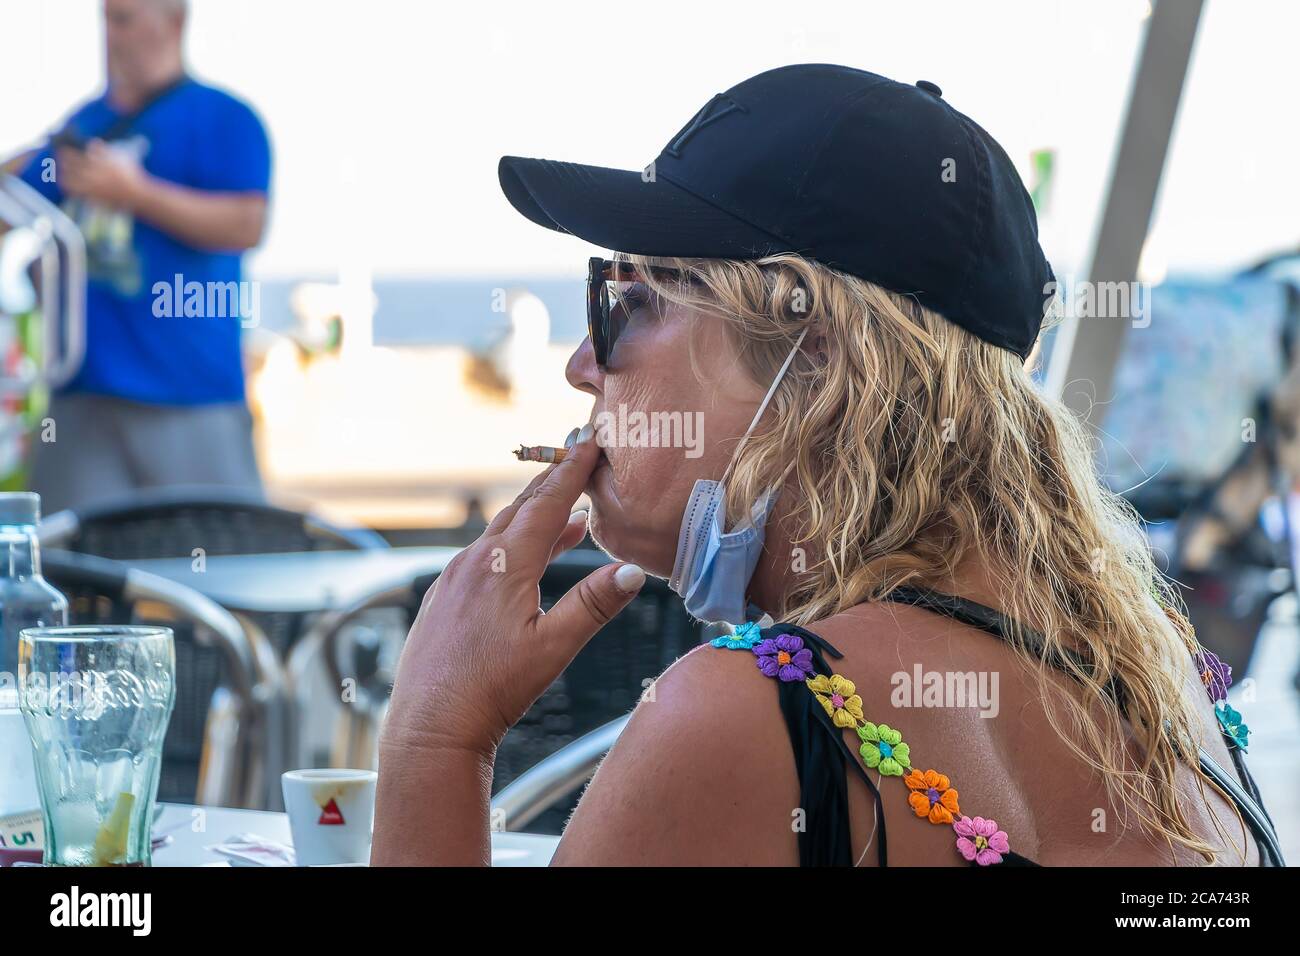 Huelva, Spain - July 10, 2020: Mature blond woman wearing face mask to avoid covid-19 coronavirus is smoking a cigarette in a bar terrace Stock Photo